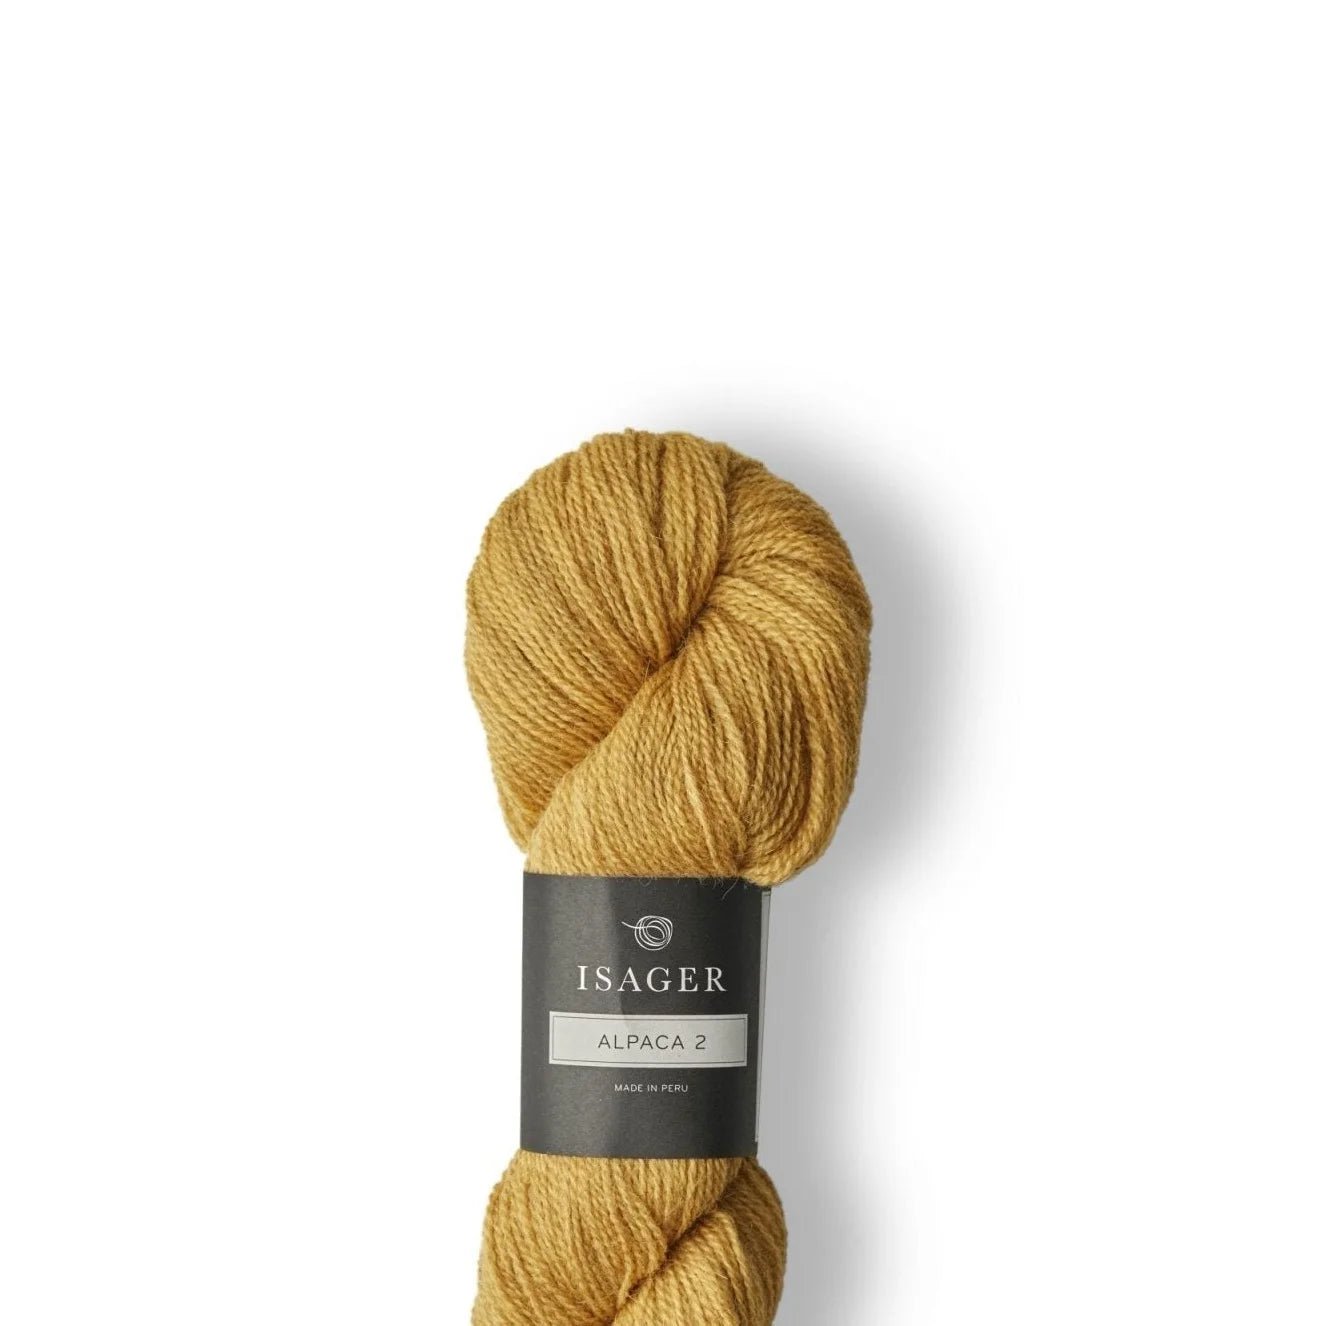 Isager Alpaca 2 - 59 - 4 Ply - Alpaca - The Little Yarn Store